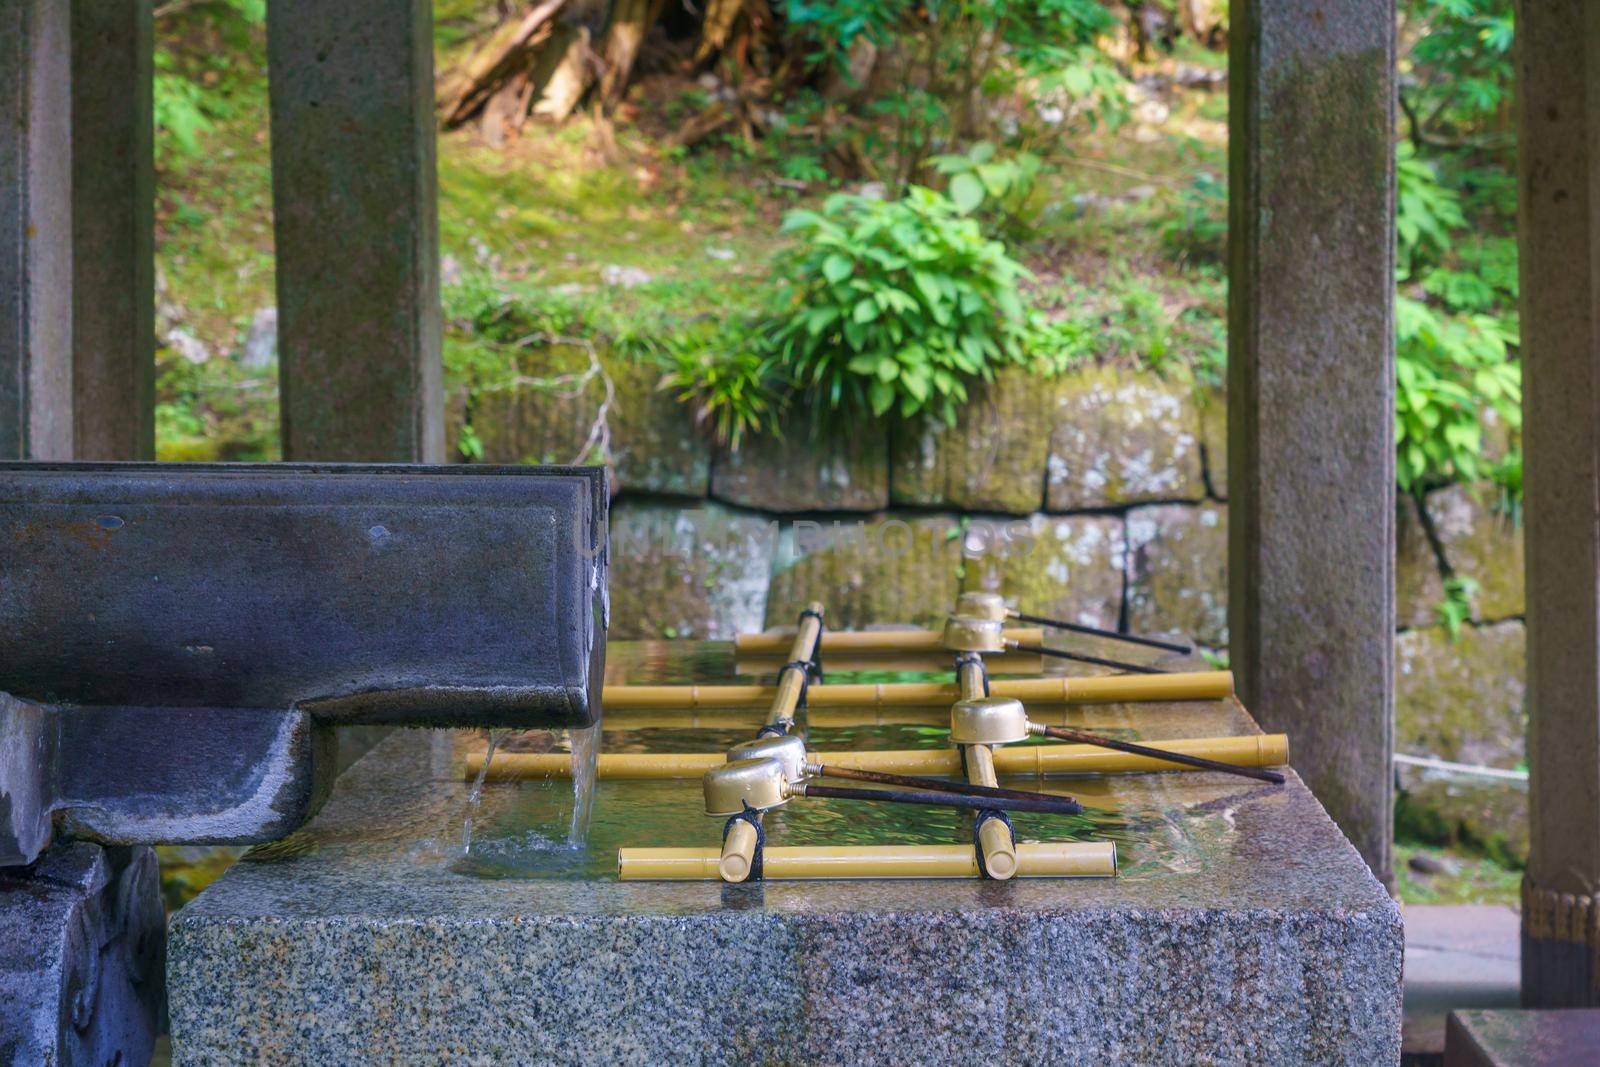 View of a Temizuya for ceremonial body purification, in the Taiyuinbyo Shrine, Nikko, Japan